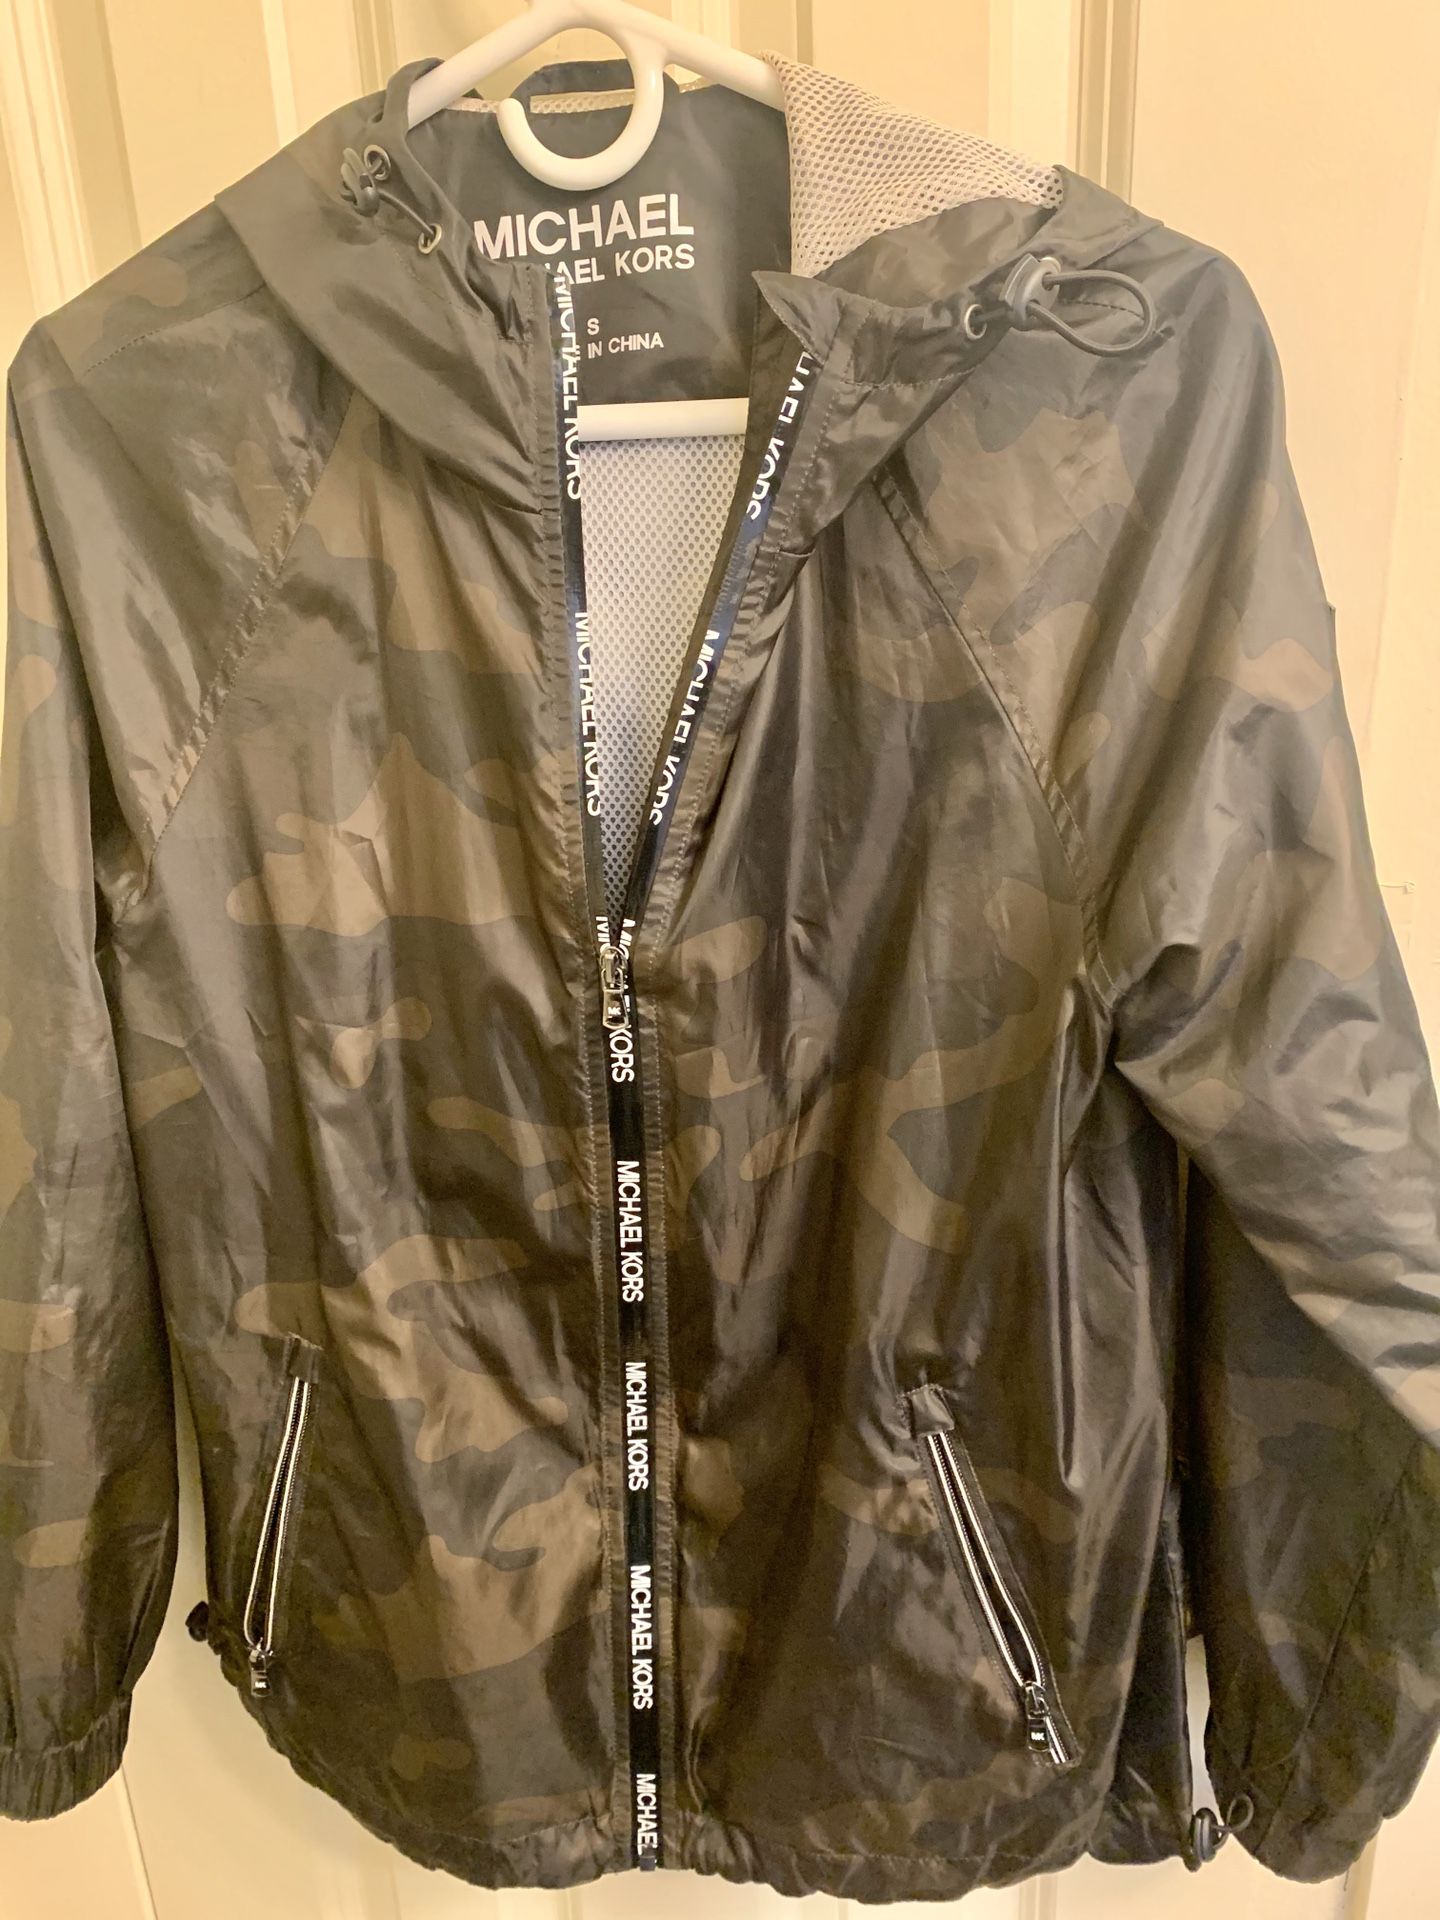 Michael Kors rain jacket